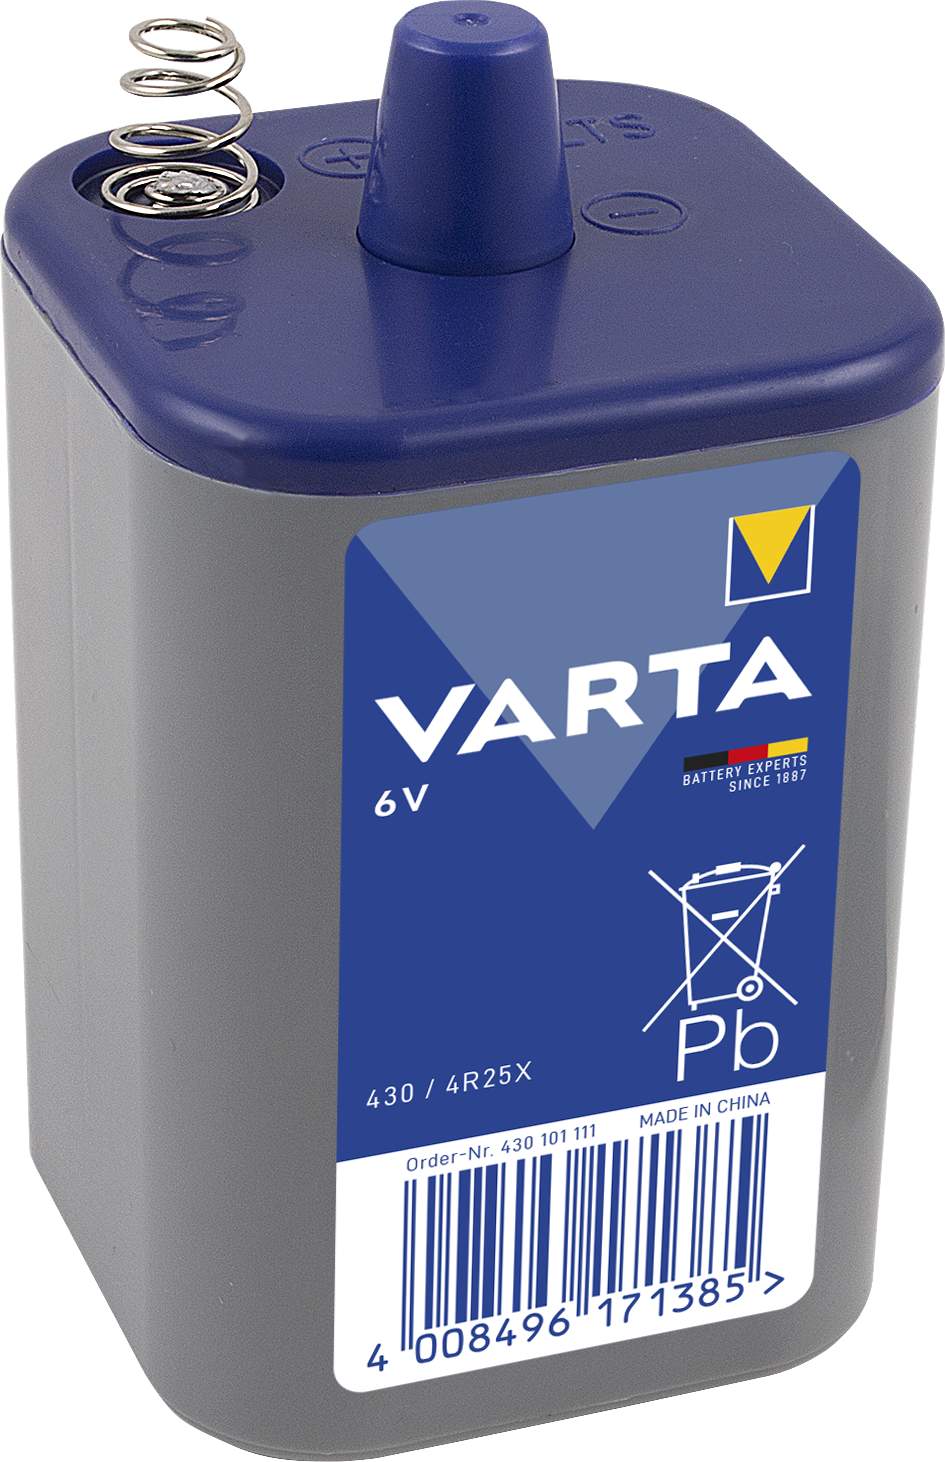 Pile 4R25 Varta Saline 6V Plastique Ressort